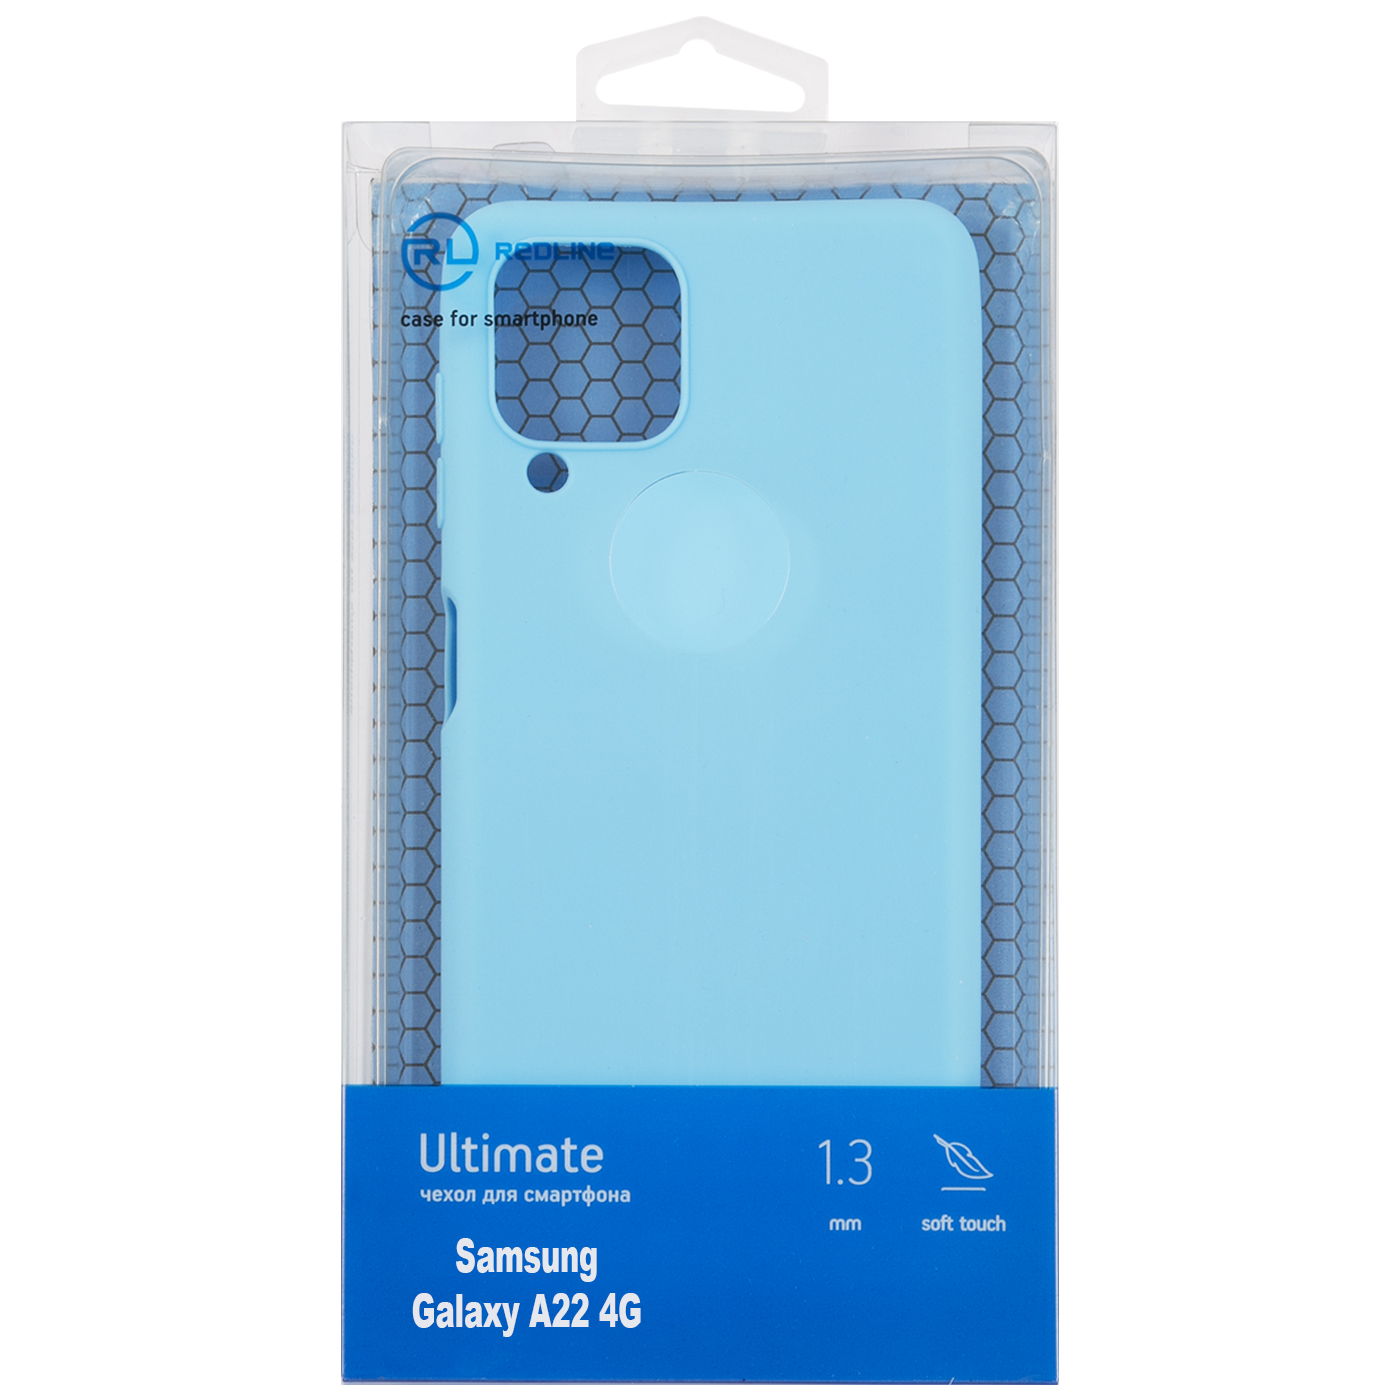 Чехол защитный Red Line Ultimate для Samsung Galaxy A22 4G, голубой УТ000025028 защитный чехол для смартфона red line ultimate для samsung galaxy a32 4g голубой